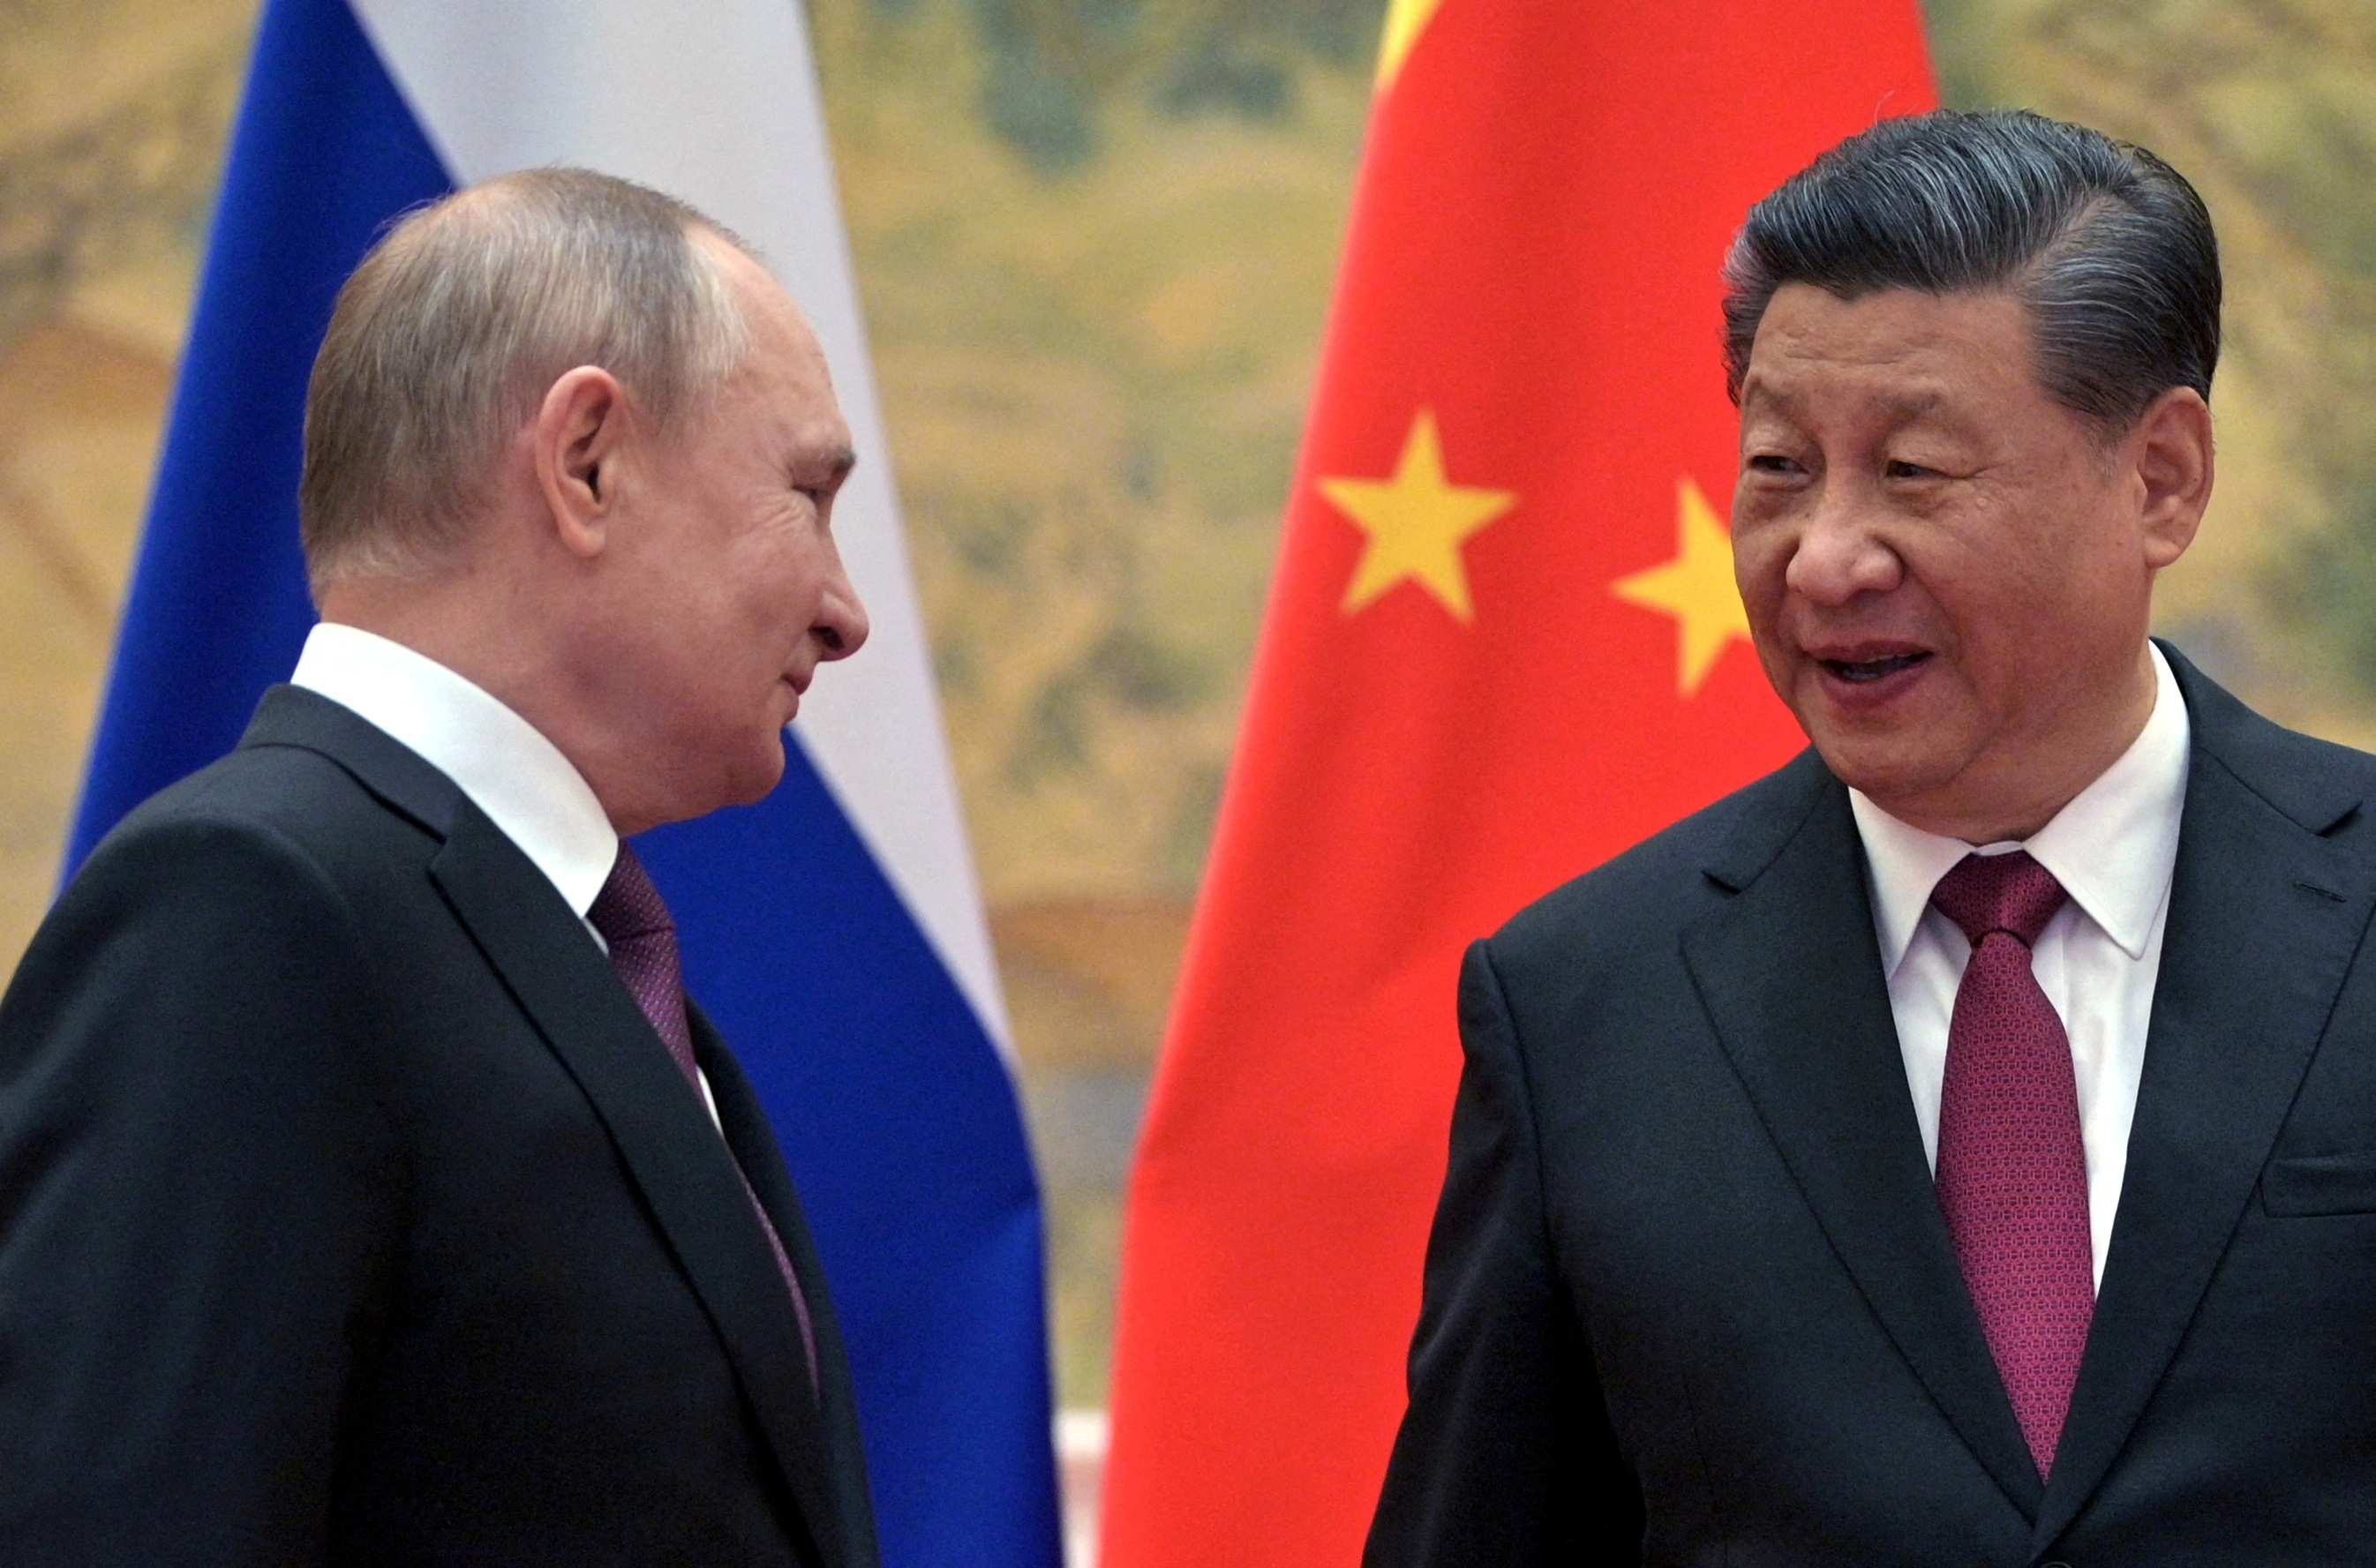  Vladimir Putin y Xi Jinping (Reuters)